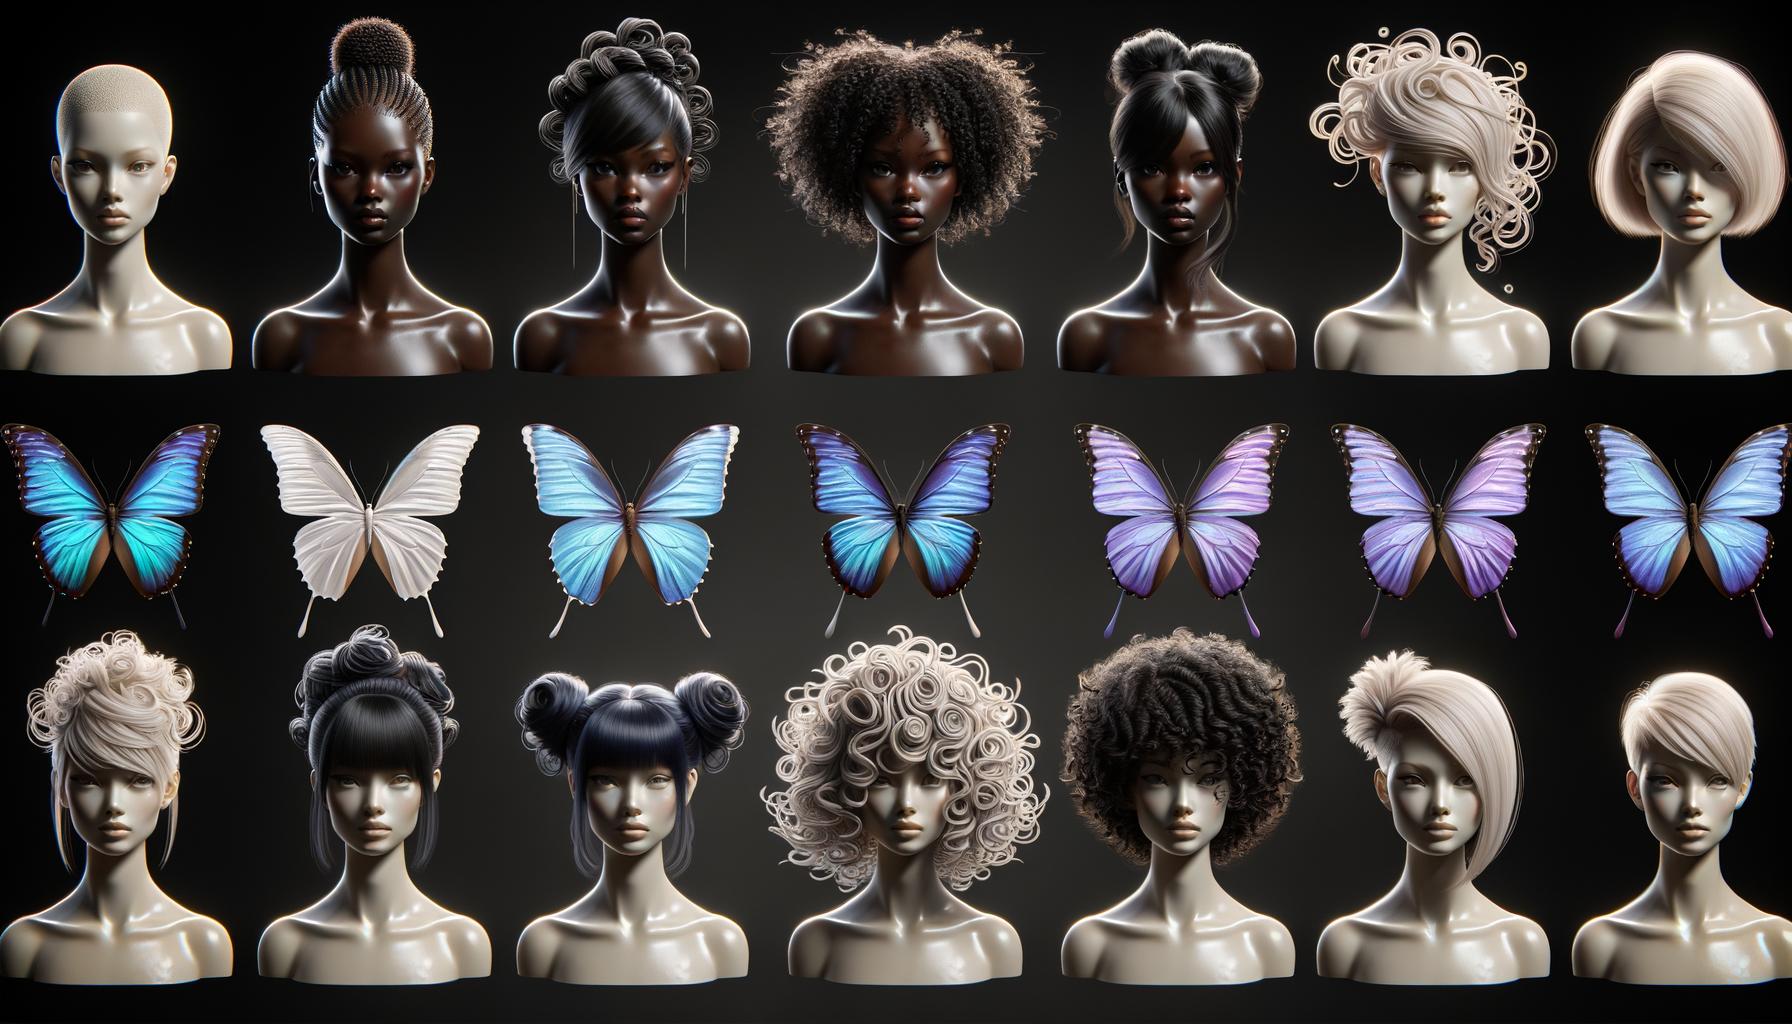 Spectacular Butterfly Cut Hair Ideas: Bold and Playful Styles